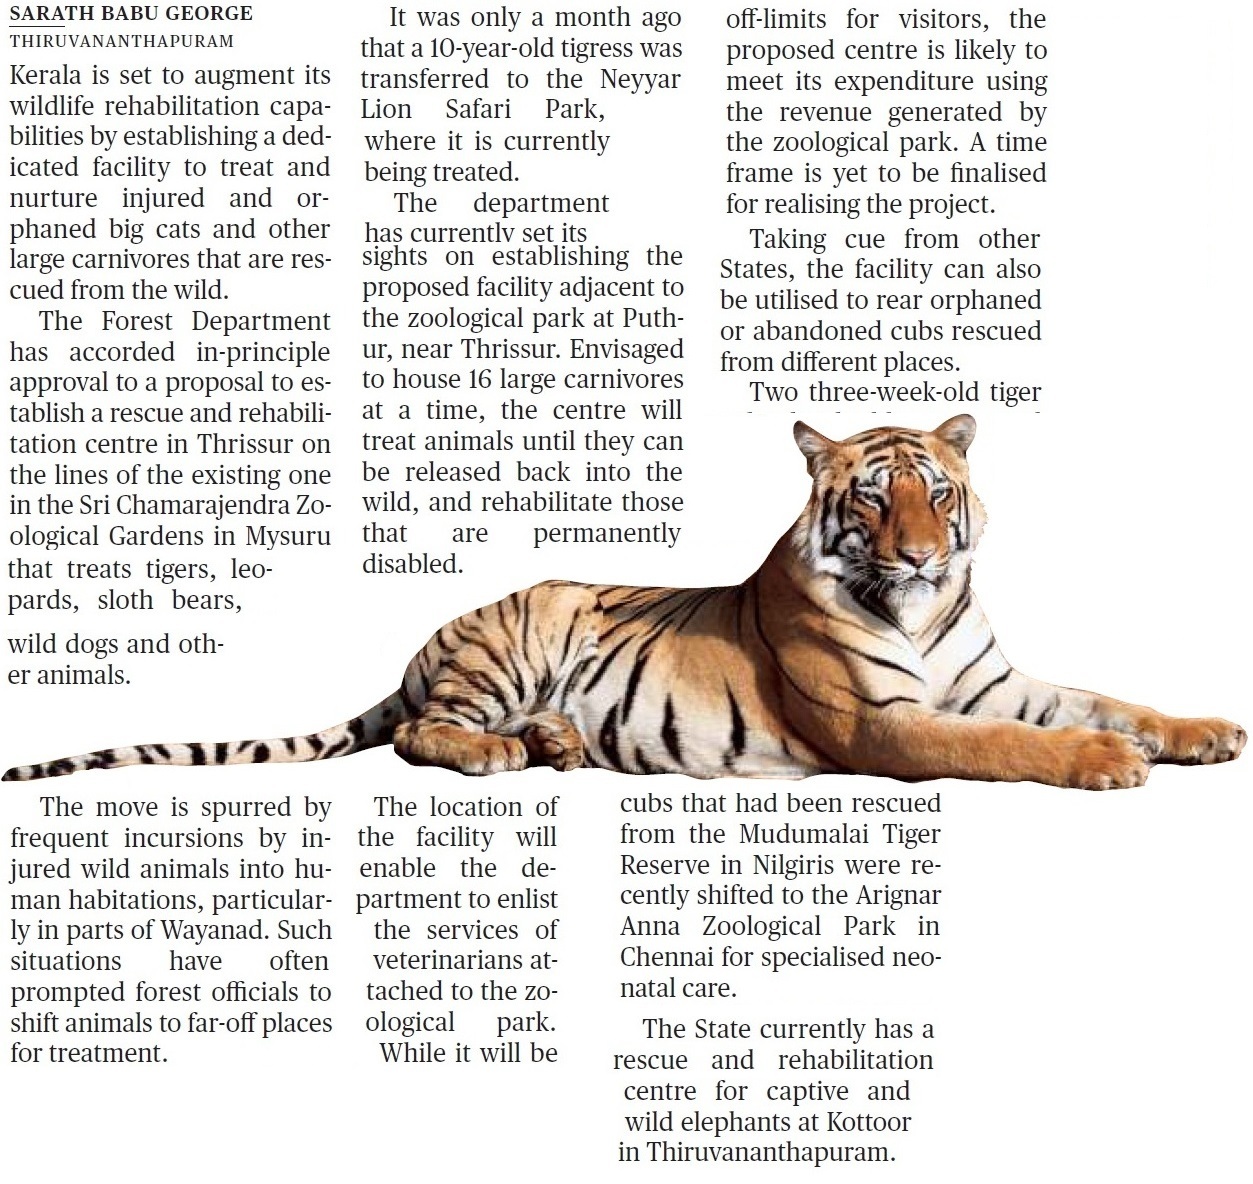 Kerala is set to augment wildlife rehab